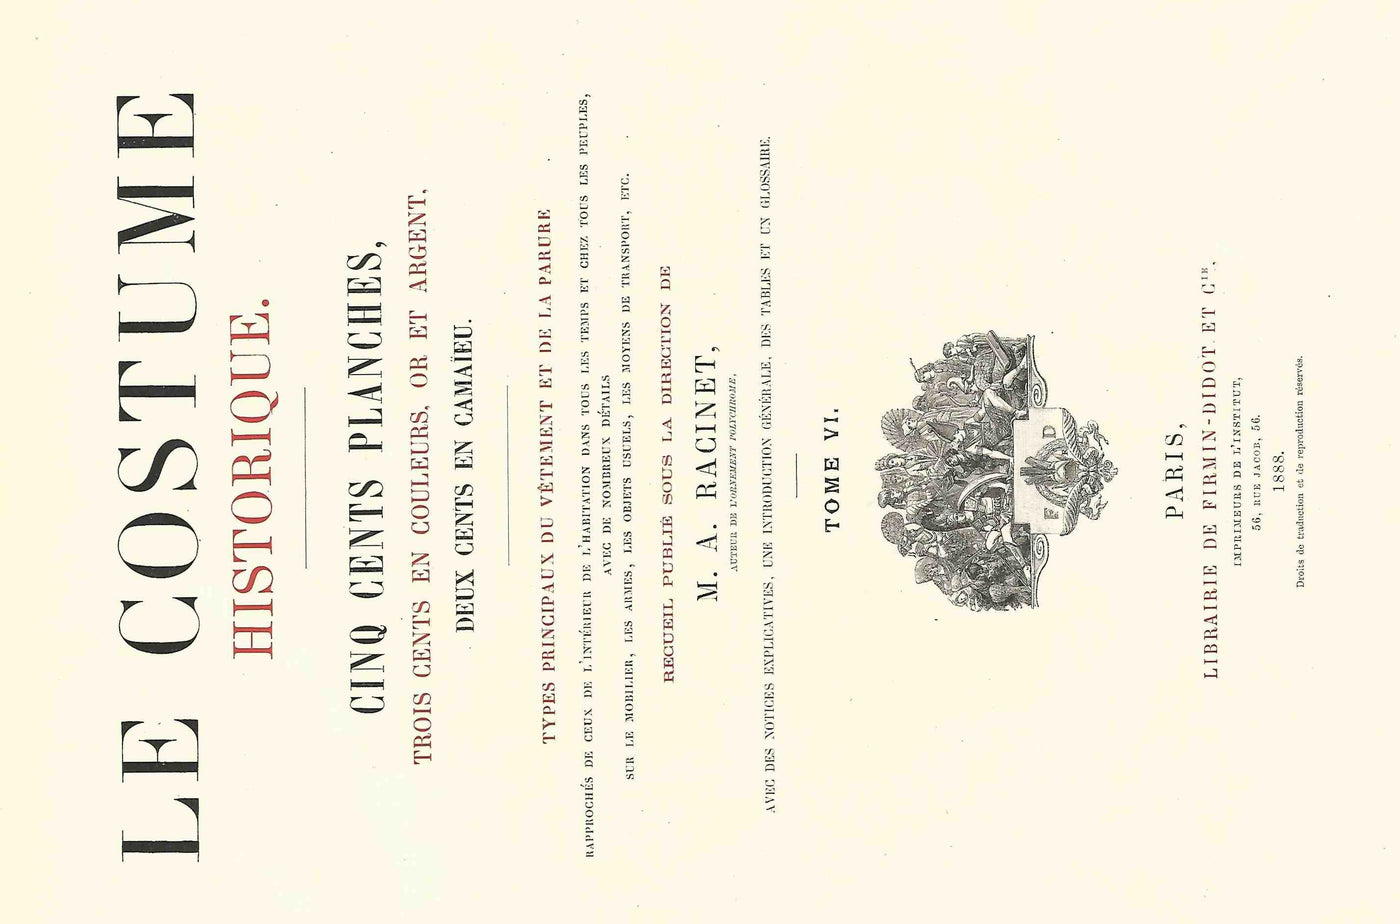 Auguste Racinet ’s Le Costume Historique first edition title page 1888